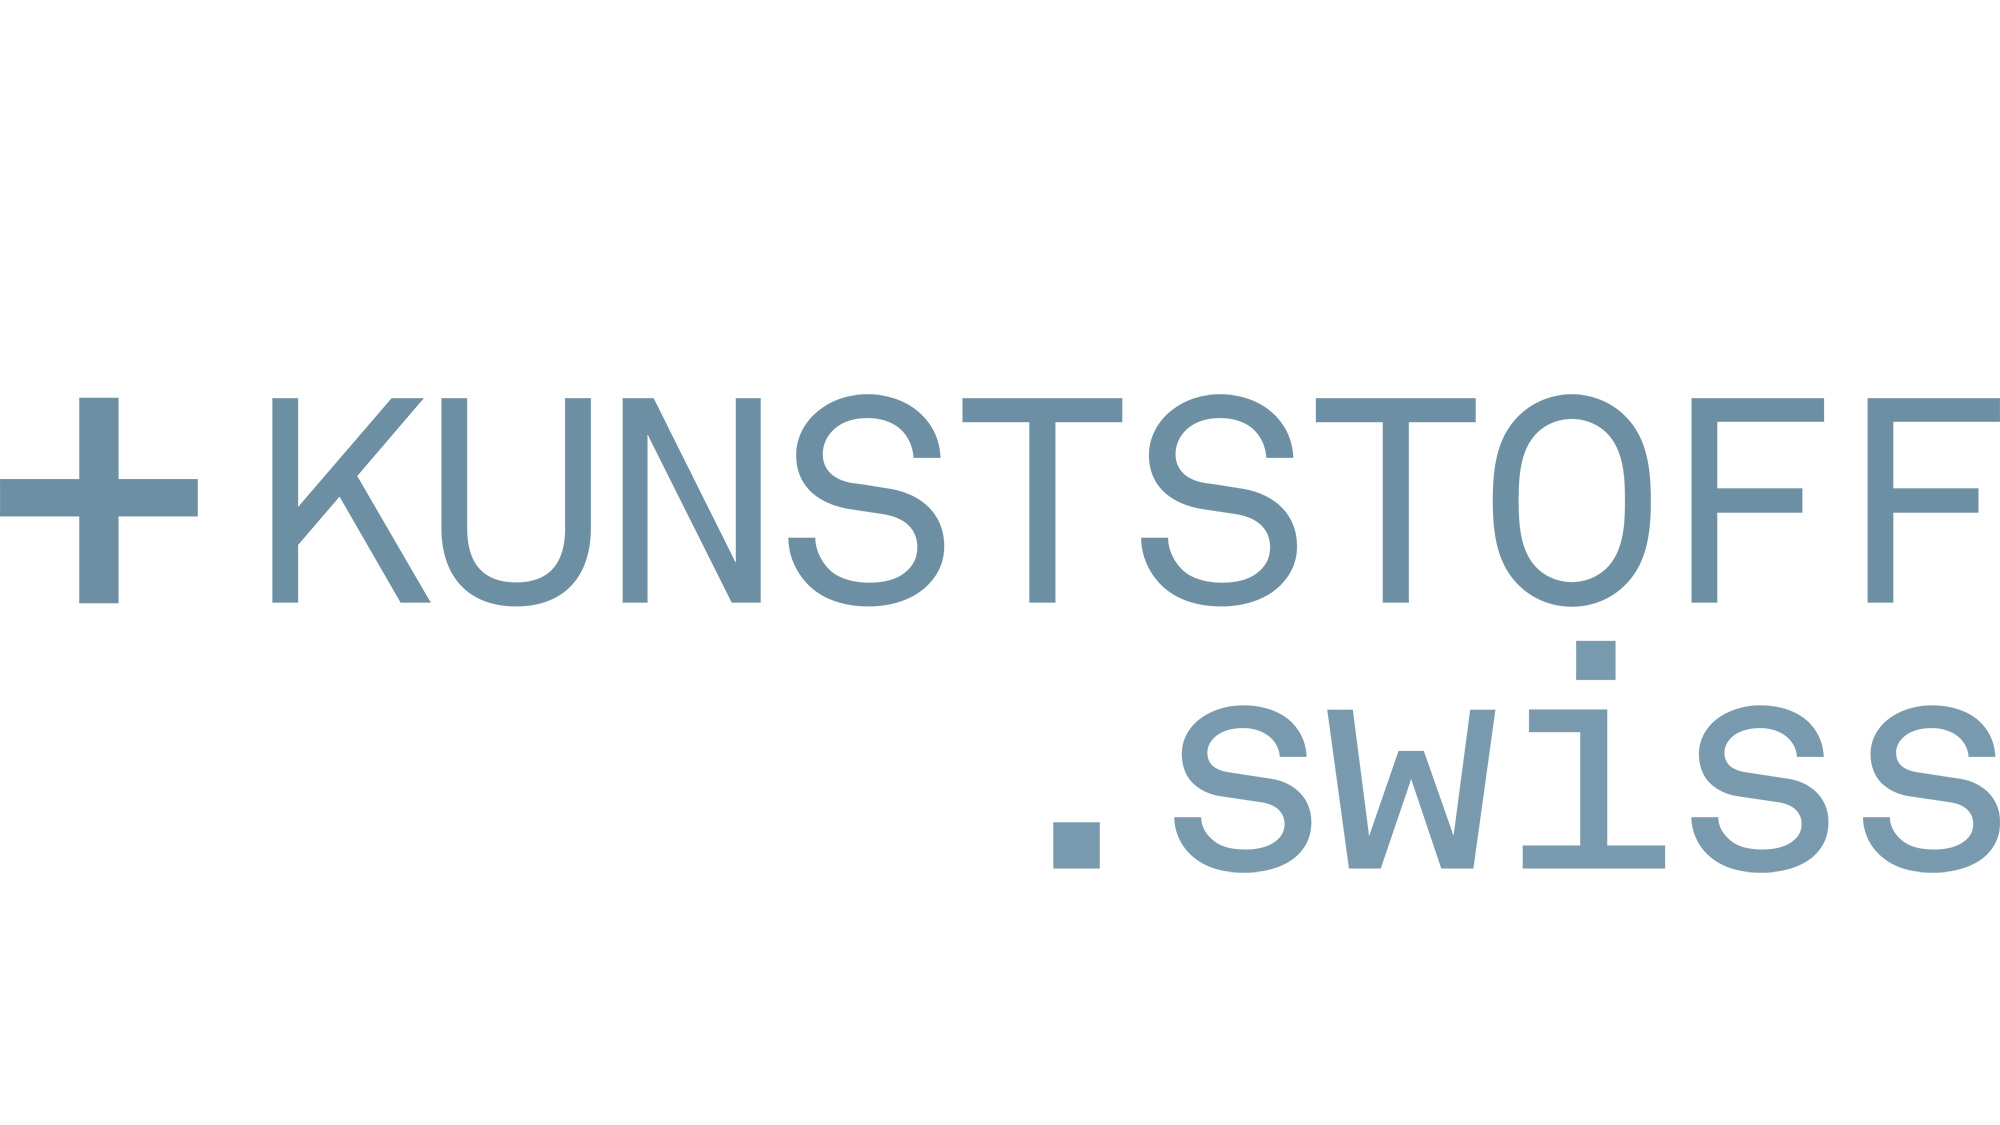 KUNSTSTOFF_swiss.jpg (0.1 MB)